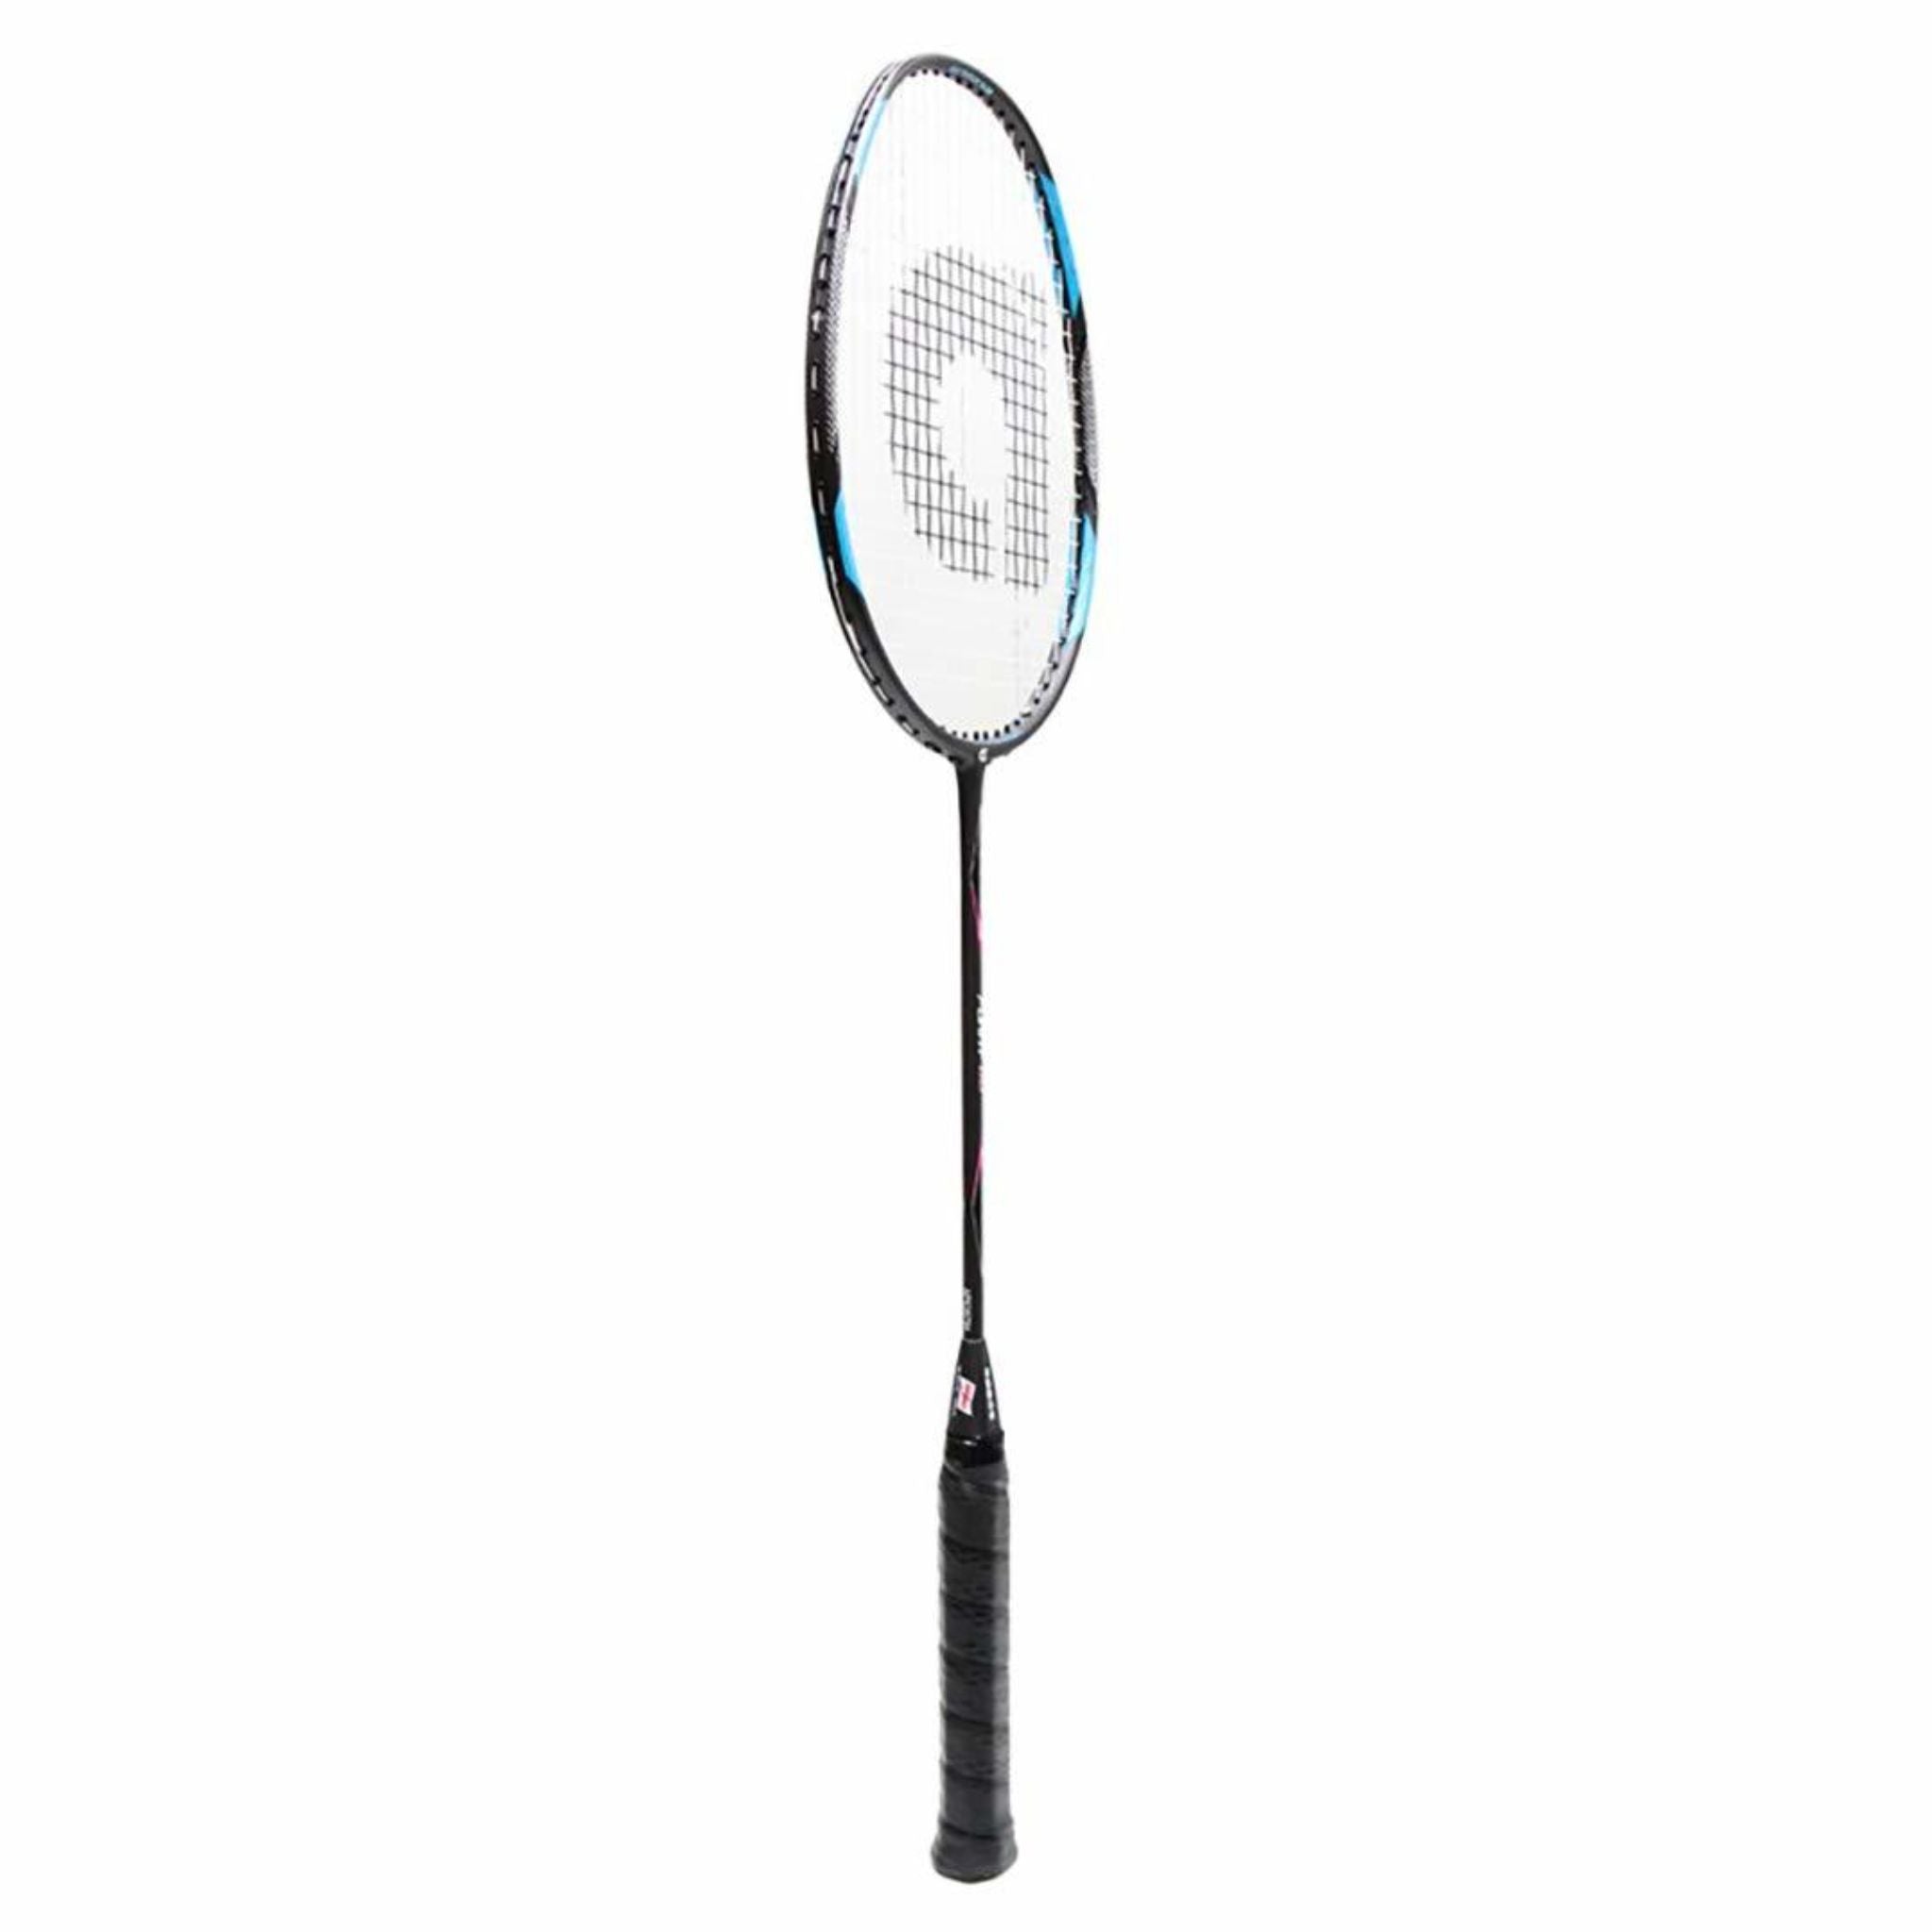 APACS Foray 68 Badminton Racket